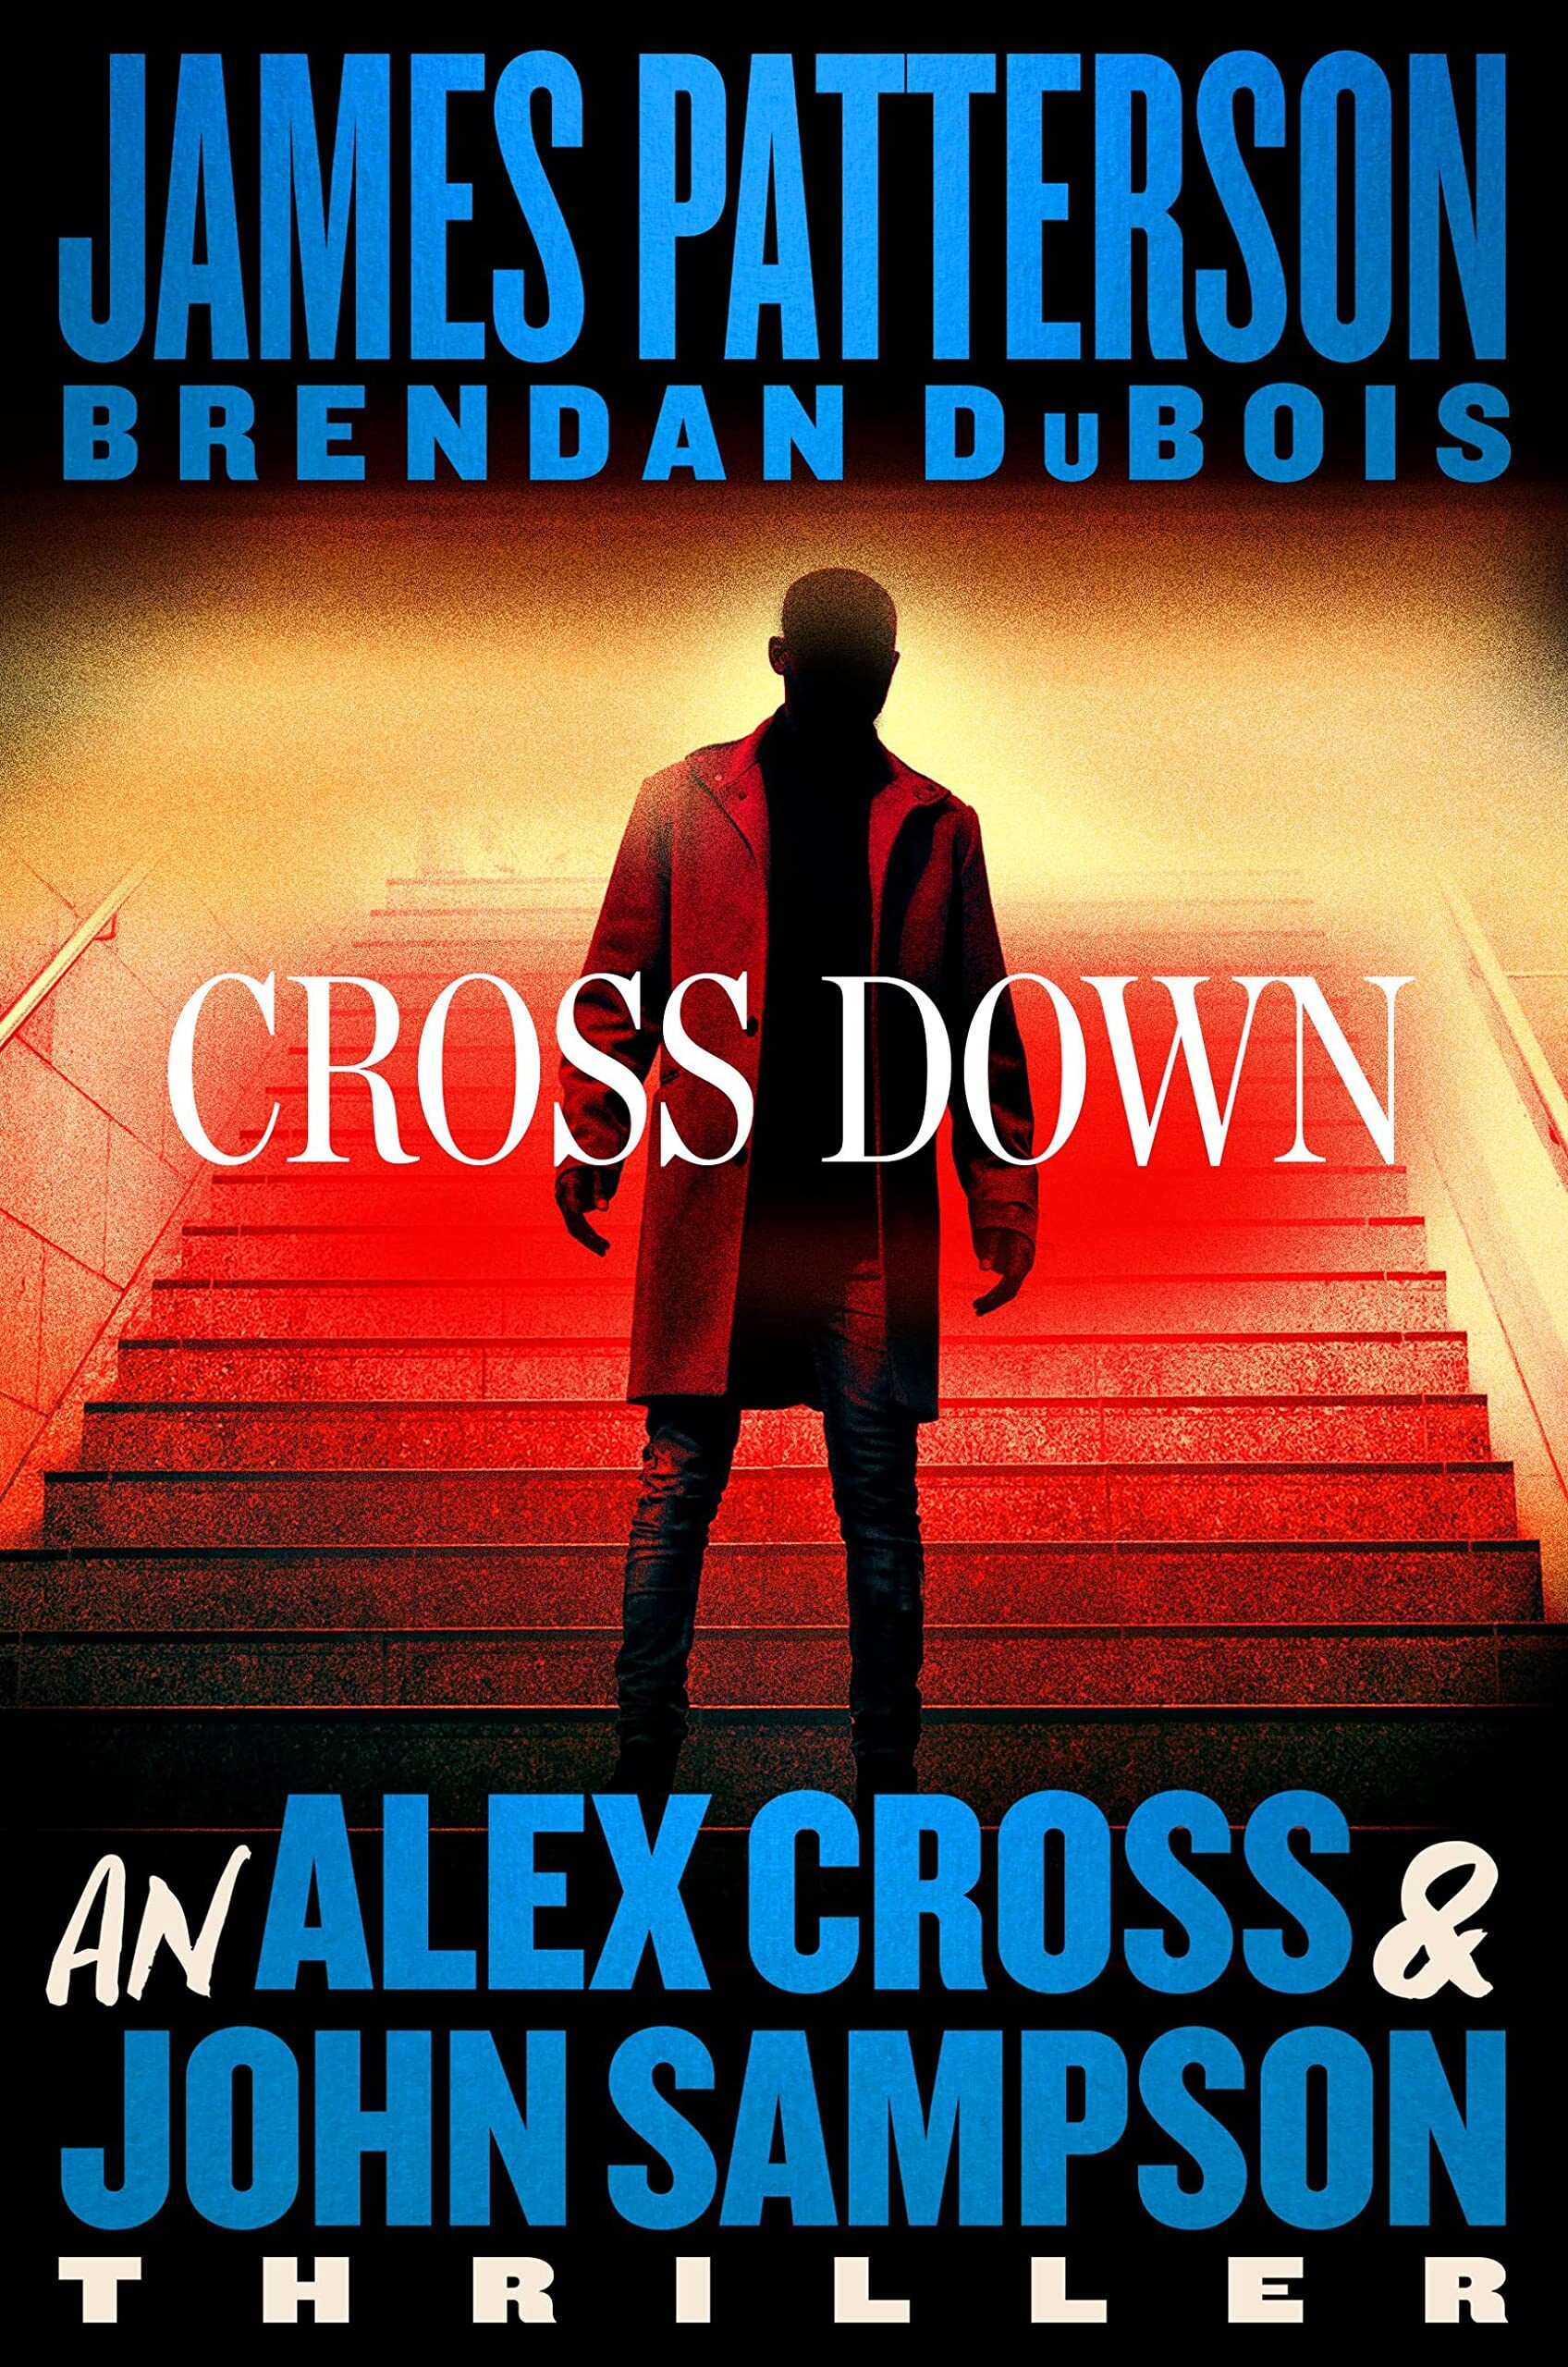 Cross Down (Alex Cross #31)